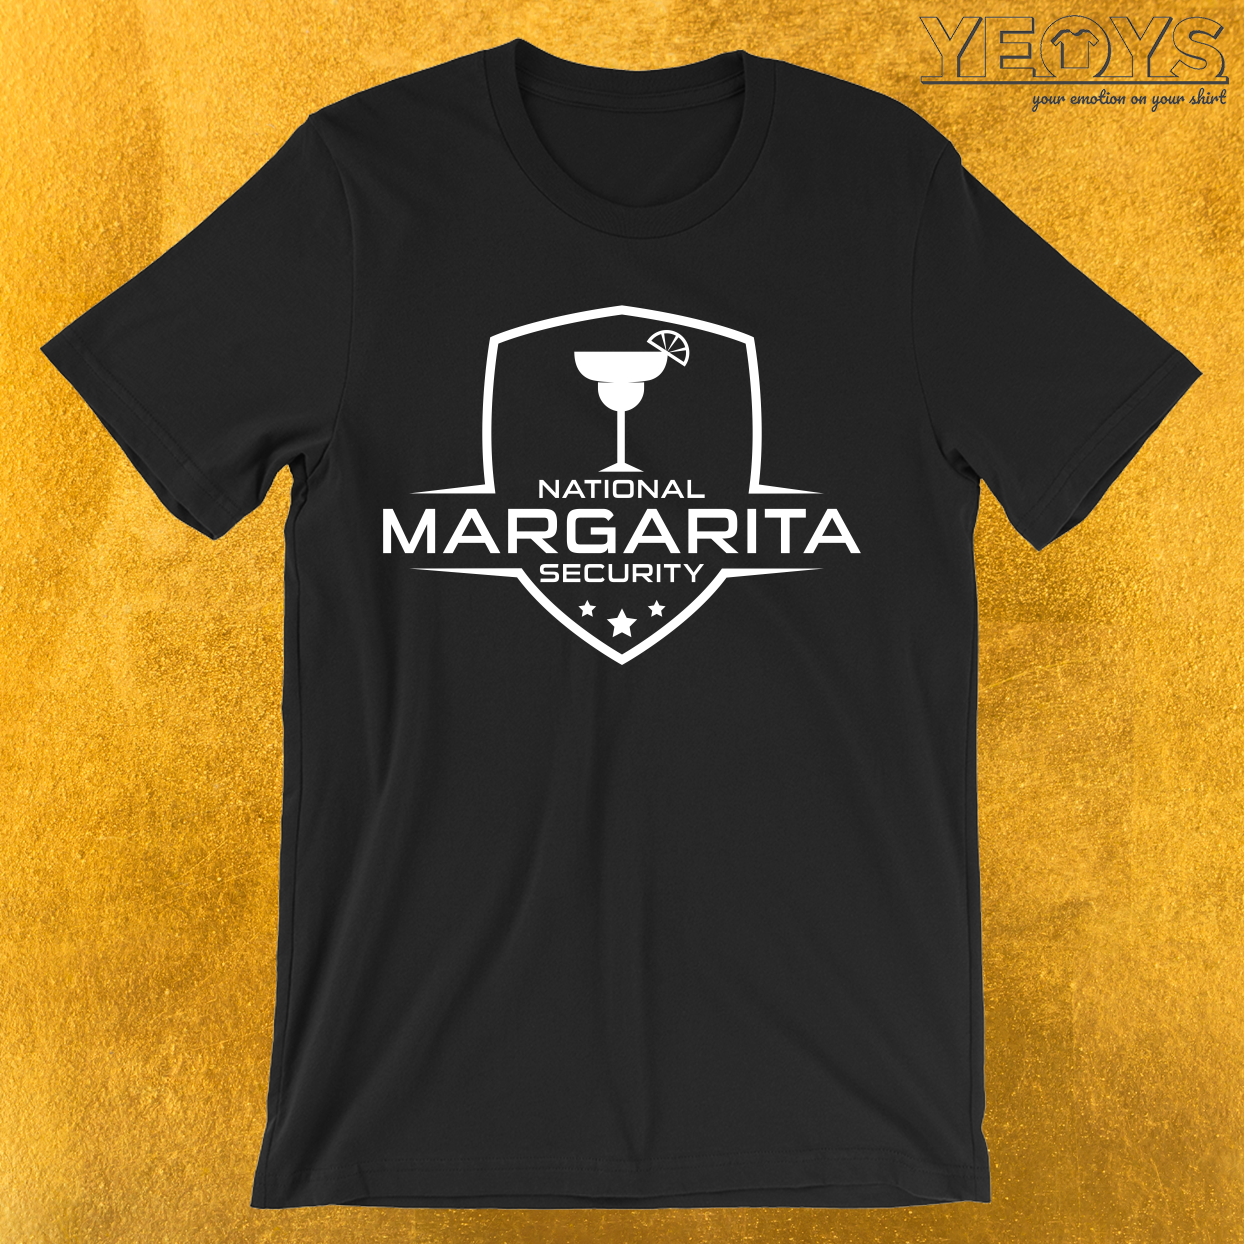 National Margarita Security T-Shirt